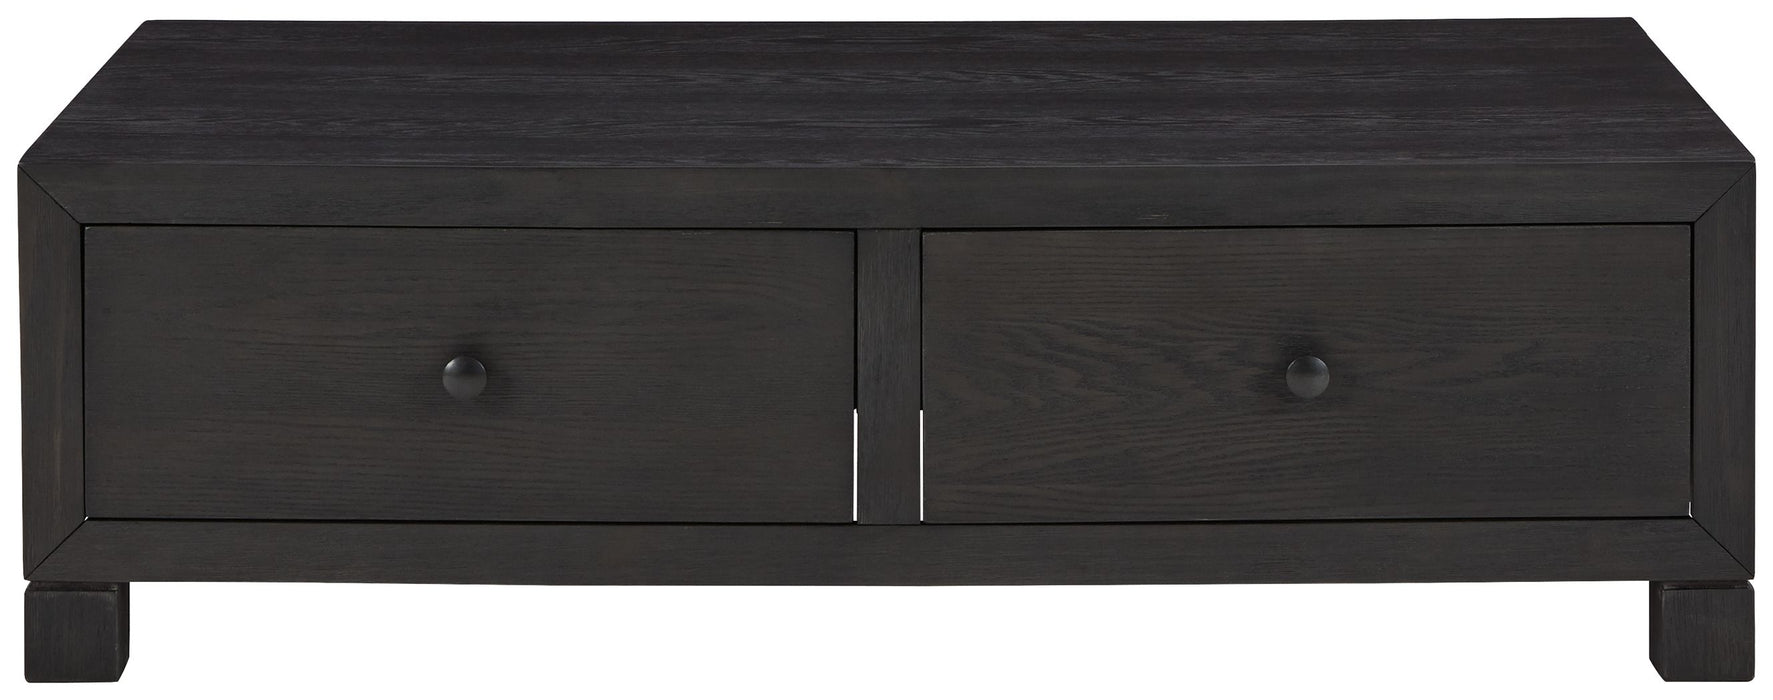 Foyland - Black - Cocktail Table With Storage Unique Piece Furniture